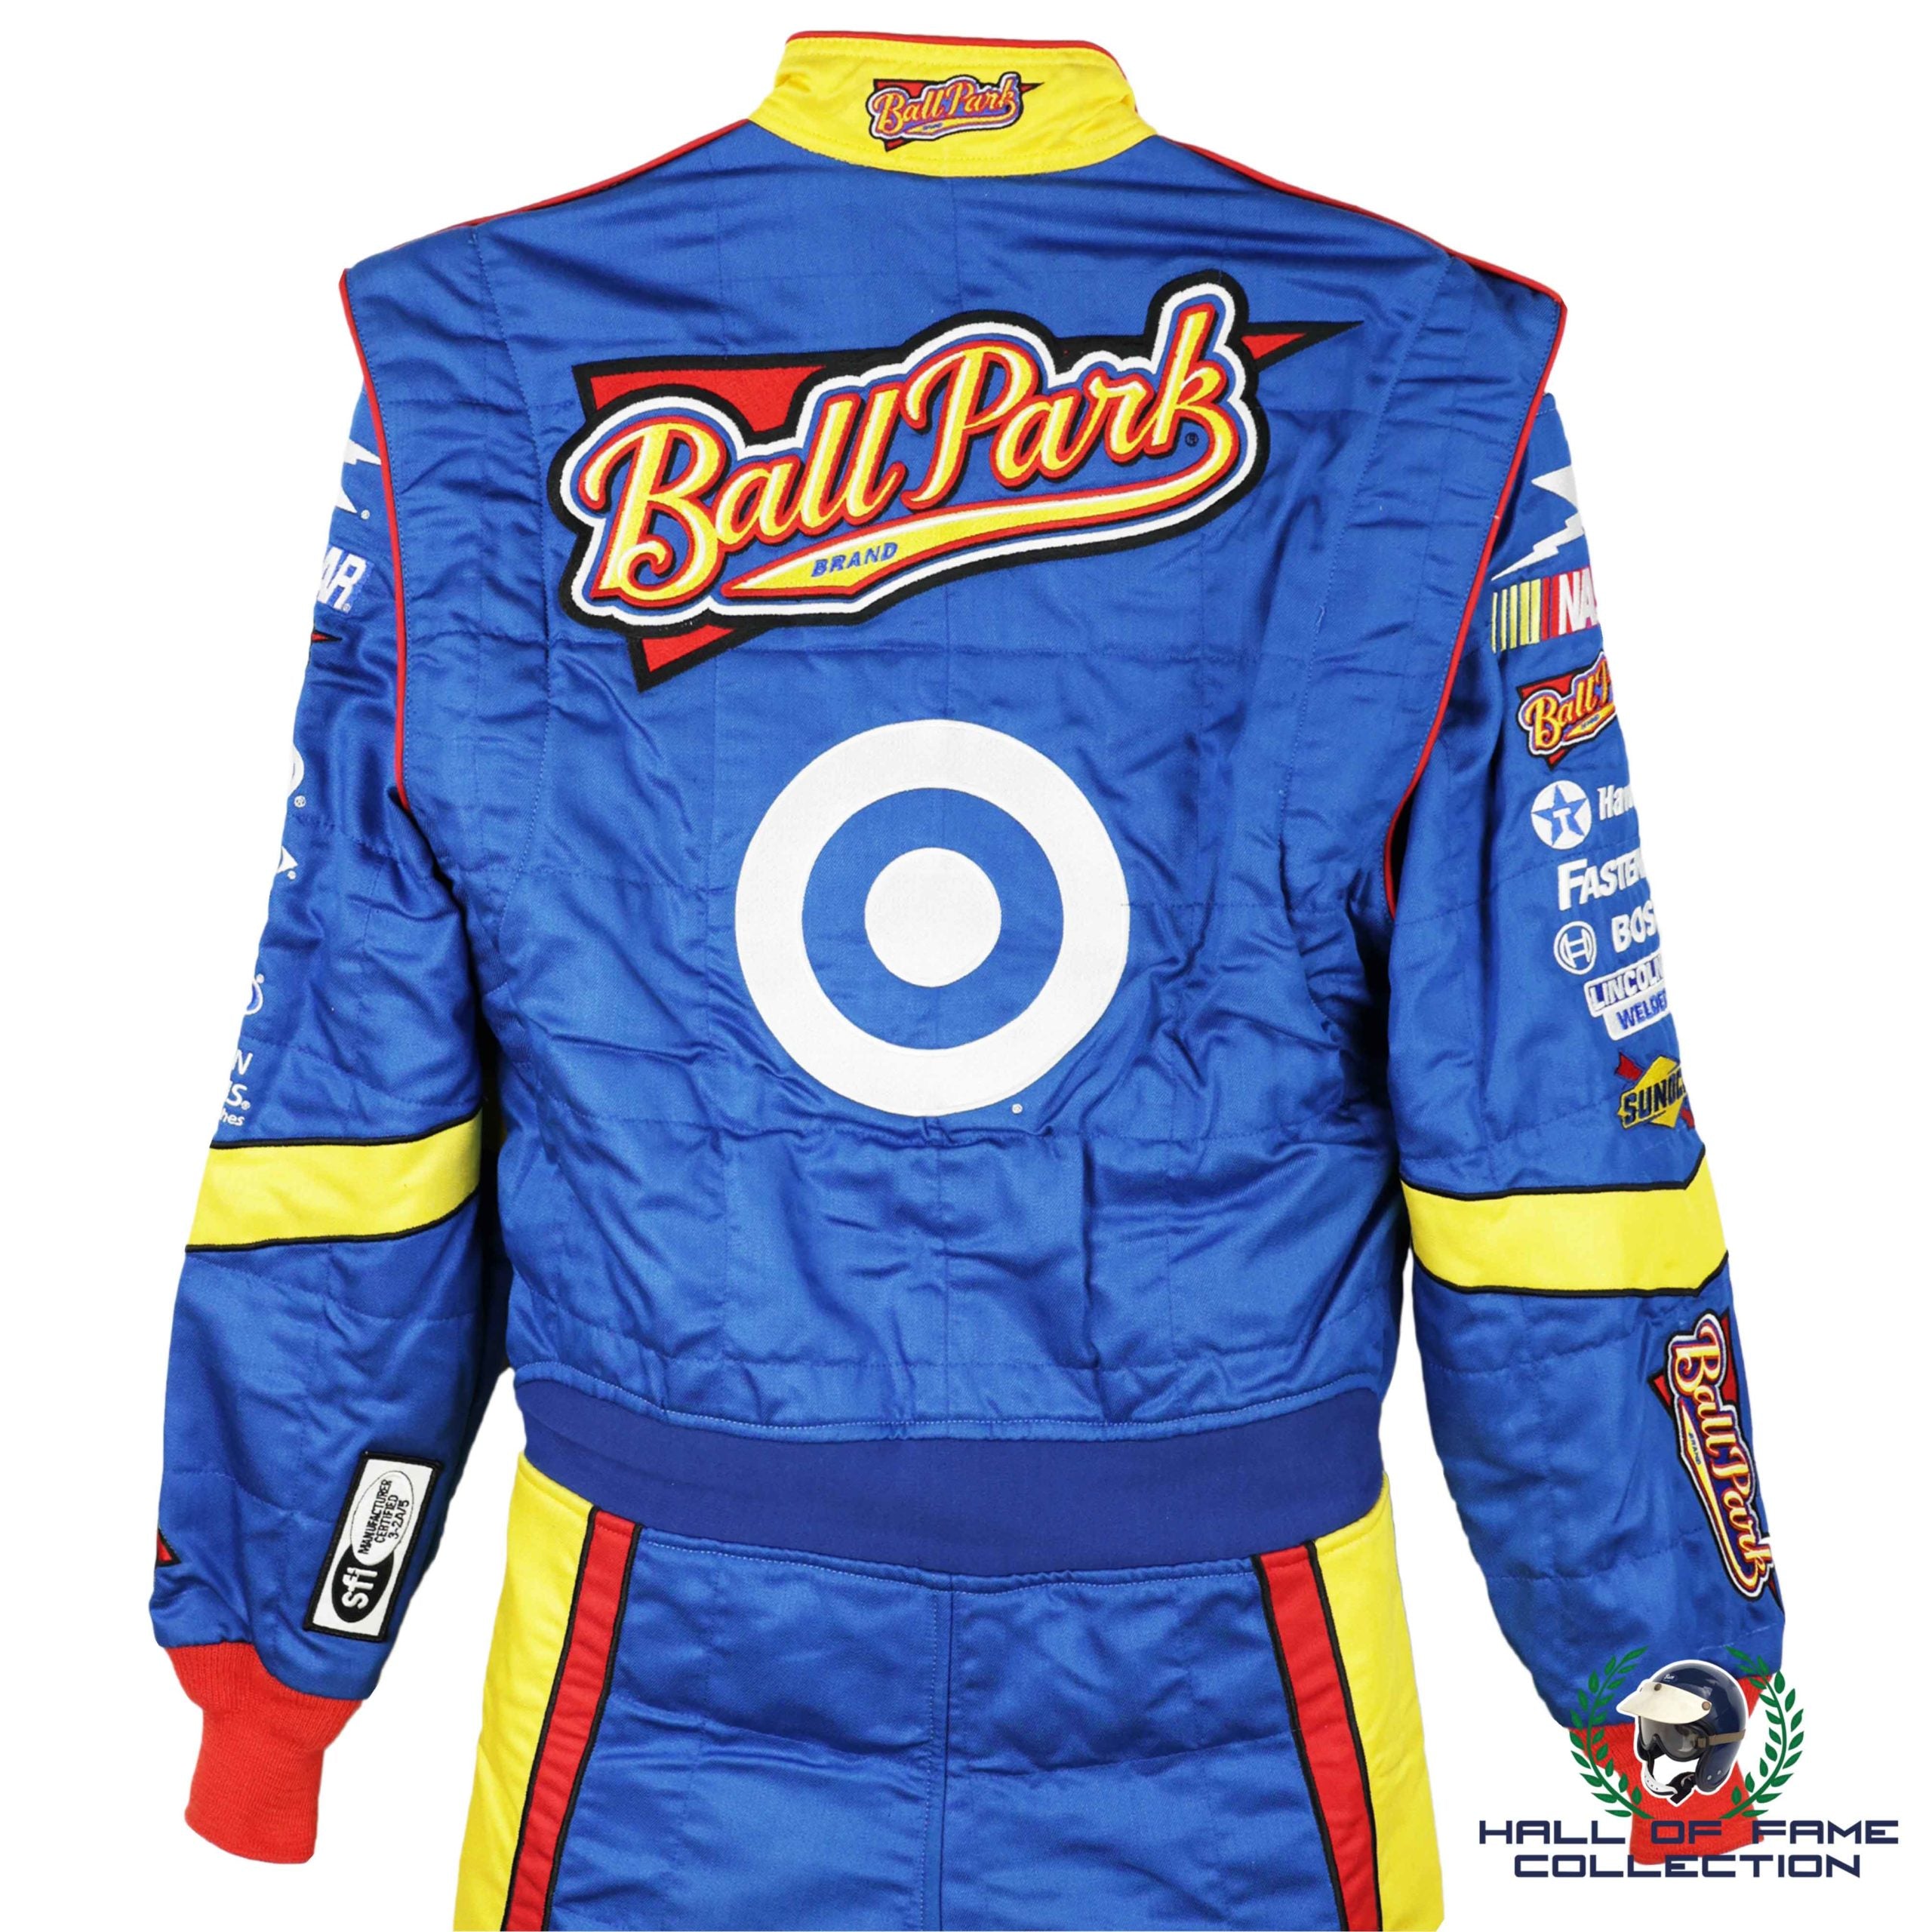 2008 Dario Franchitti Original Unused Ballpark Chip Ganassi Racing Nascar Suit